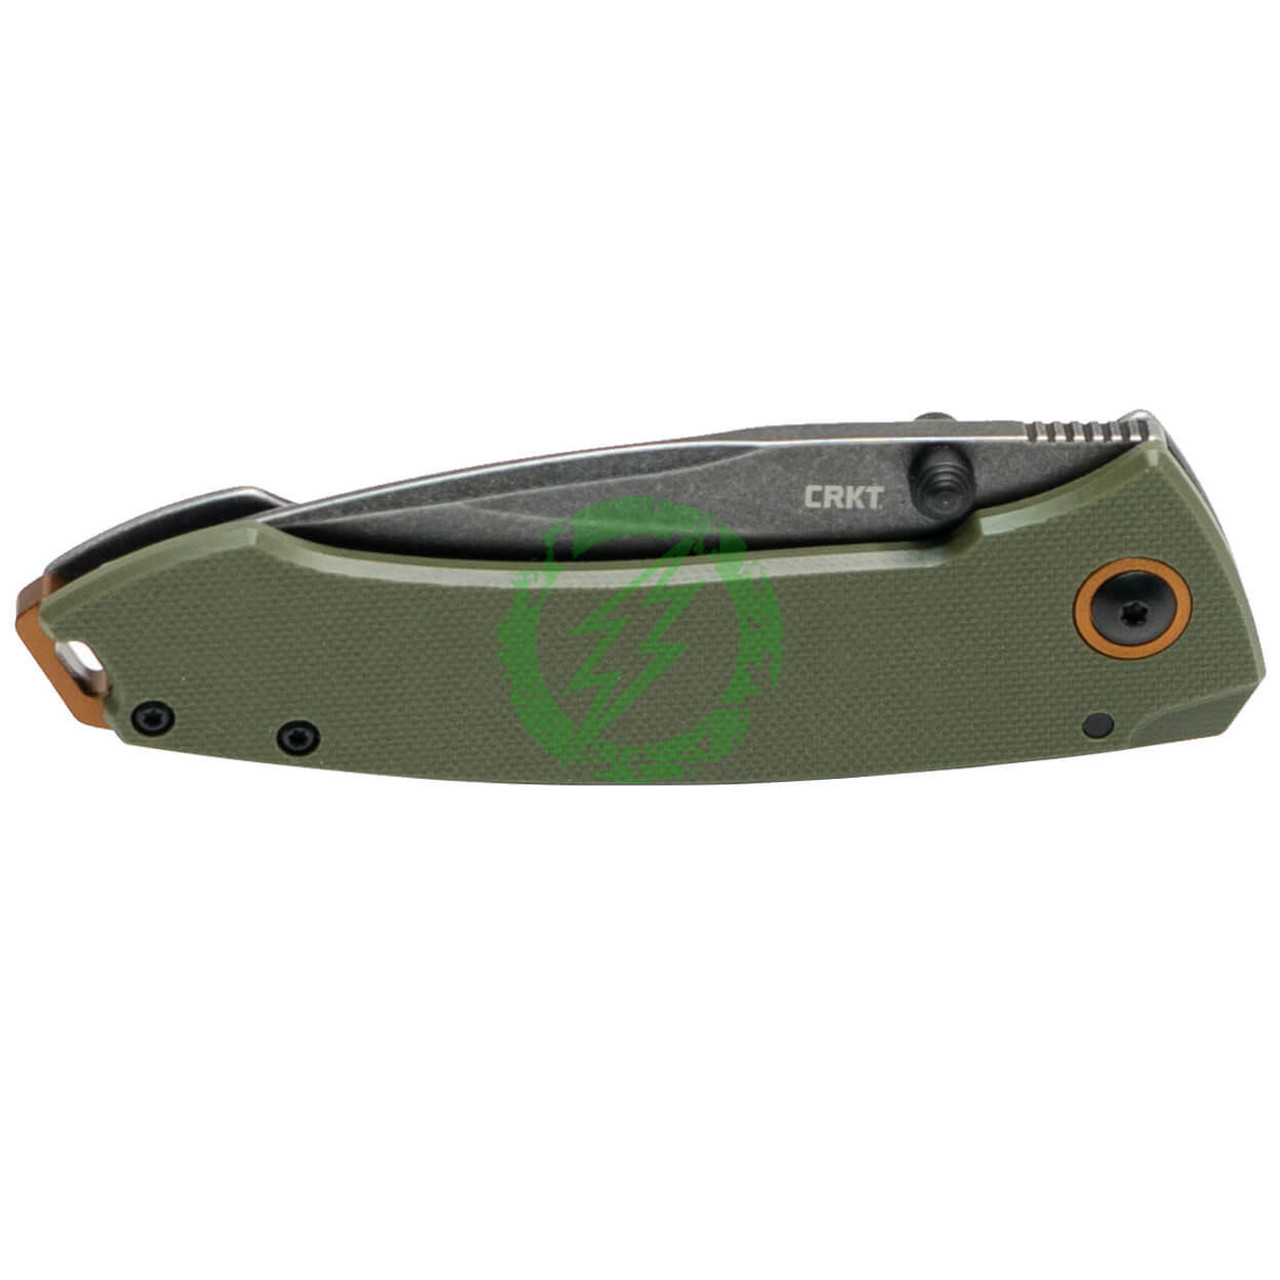 CRKT (Columbia River Knife Tool) CRKT Tuna OD Green Folding Blade Knife with G10 Handle 